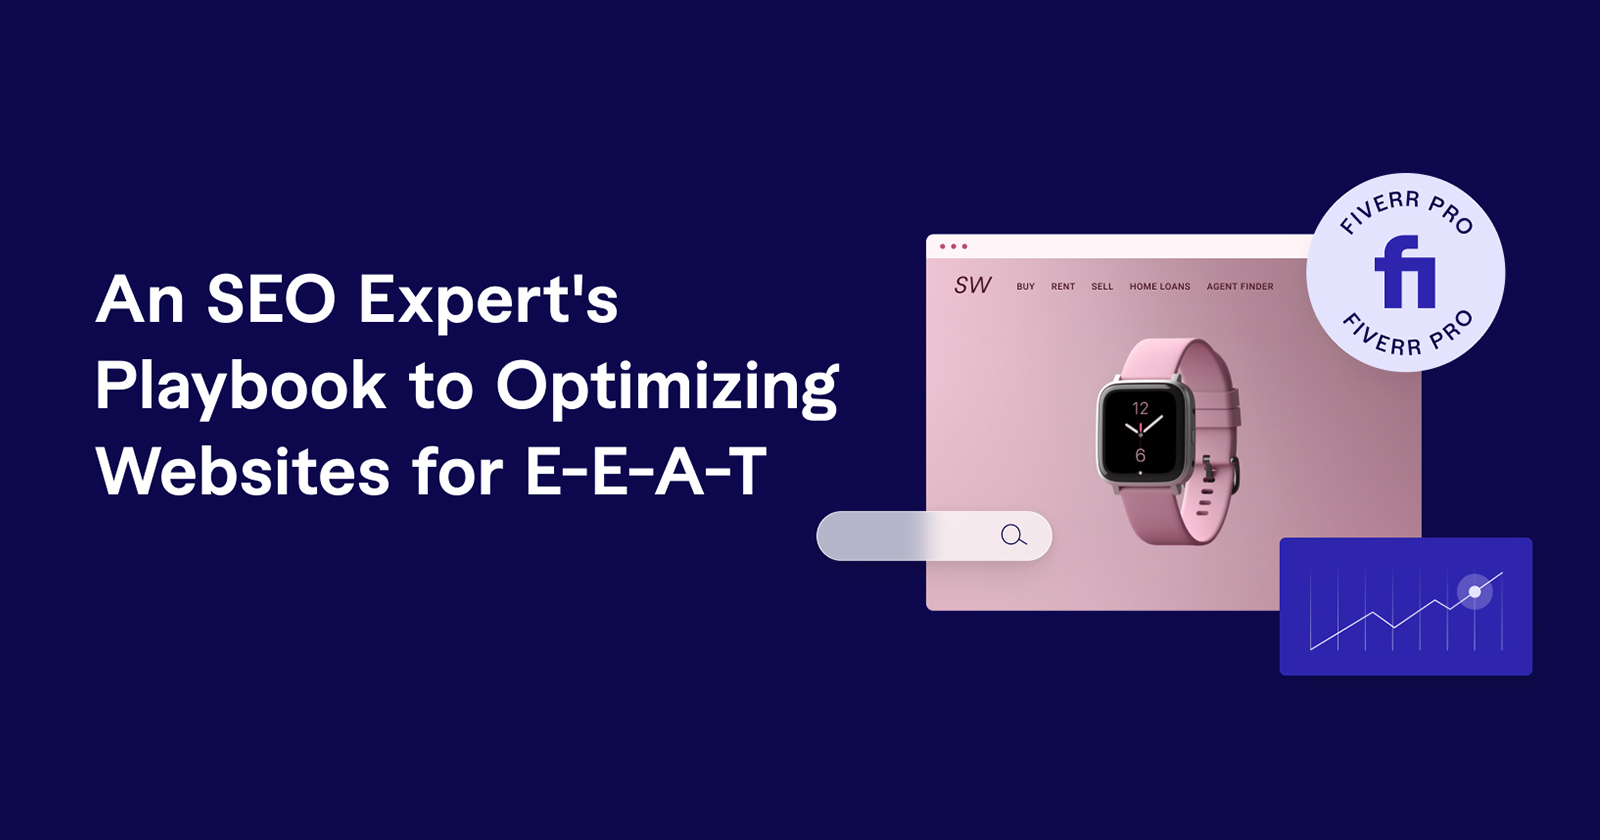 An SEO Expert's Playbook To Optimizing Websites For E-E-A-T